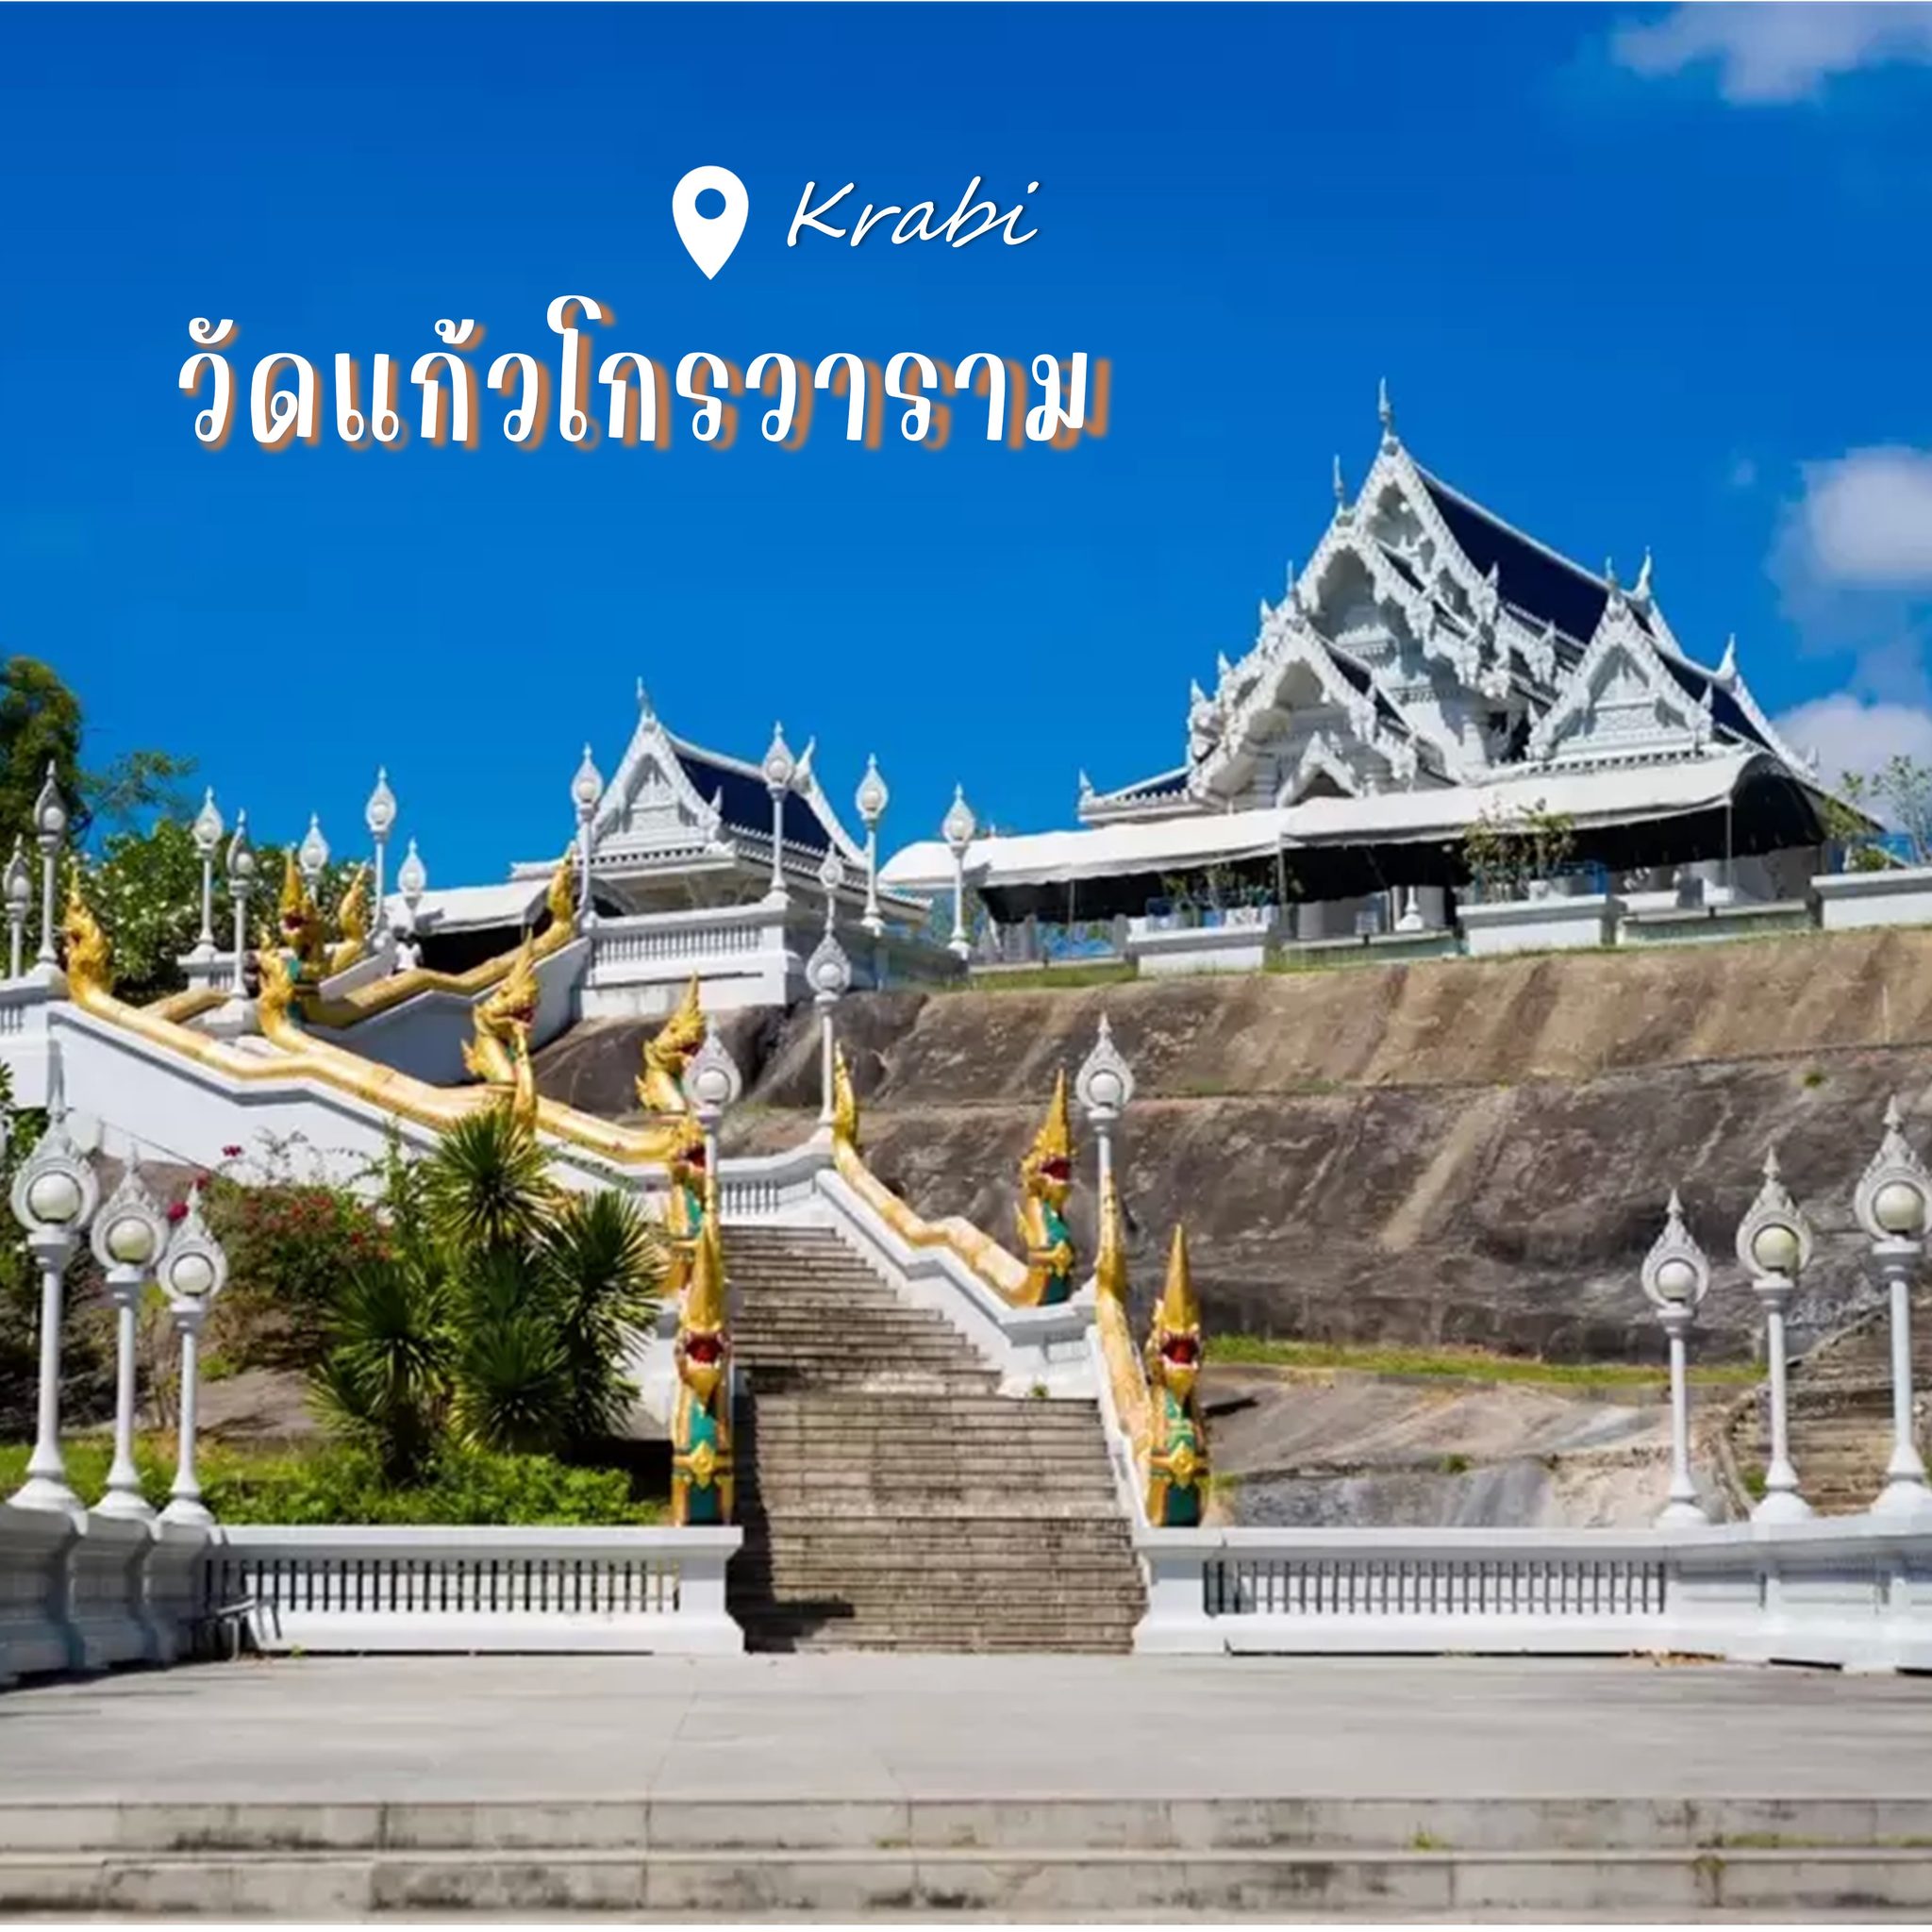 Merit-based trip with 3 temples at Krabi